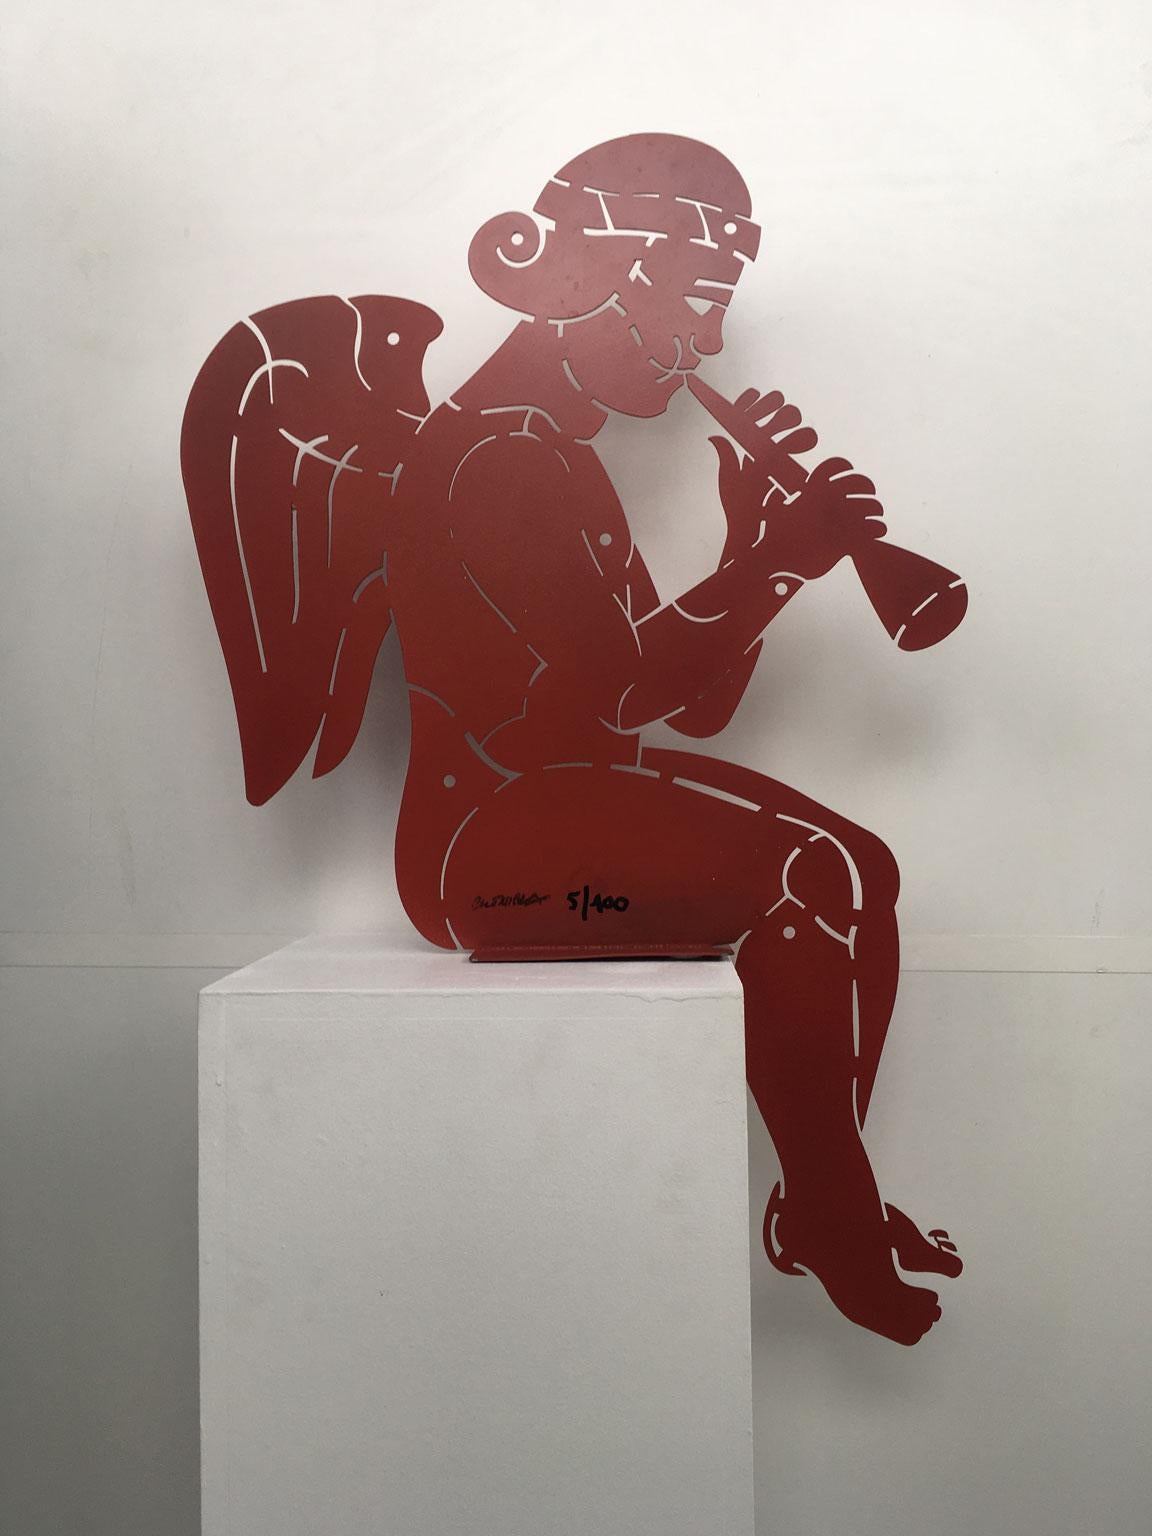 Italy 1980 Post-Modern Abstract Sculpture Bruno Chersicla Cherubino Ruggine For Sale 7